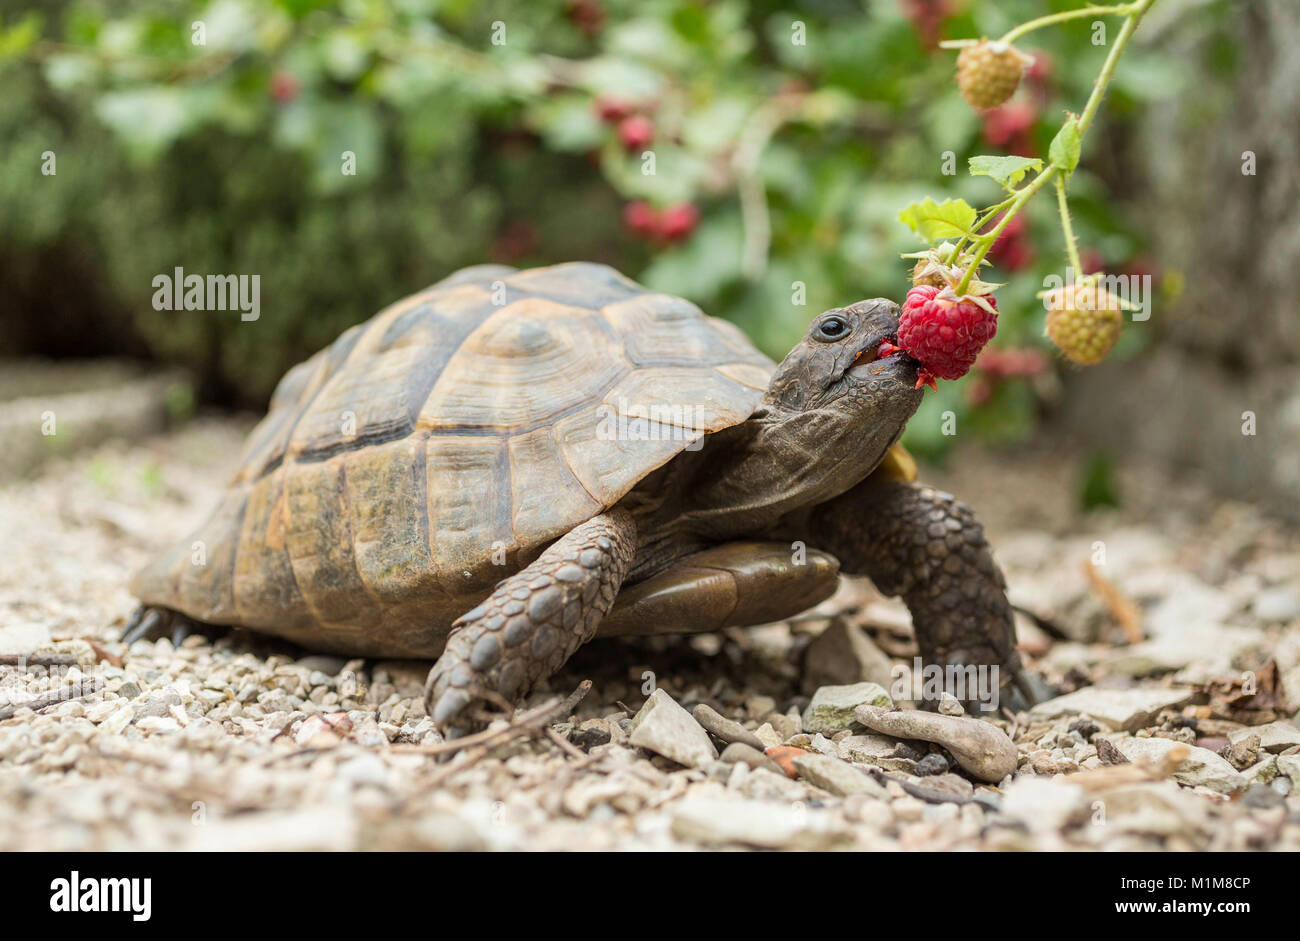 Mediterranean Spur-thighed Tortoise, Greek Tortoise (Testudo graeca). Adult eating a Raspberry. Germany Stock Photo